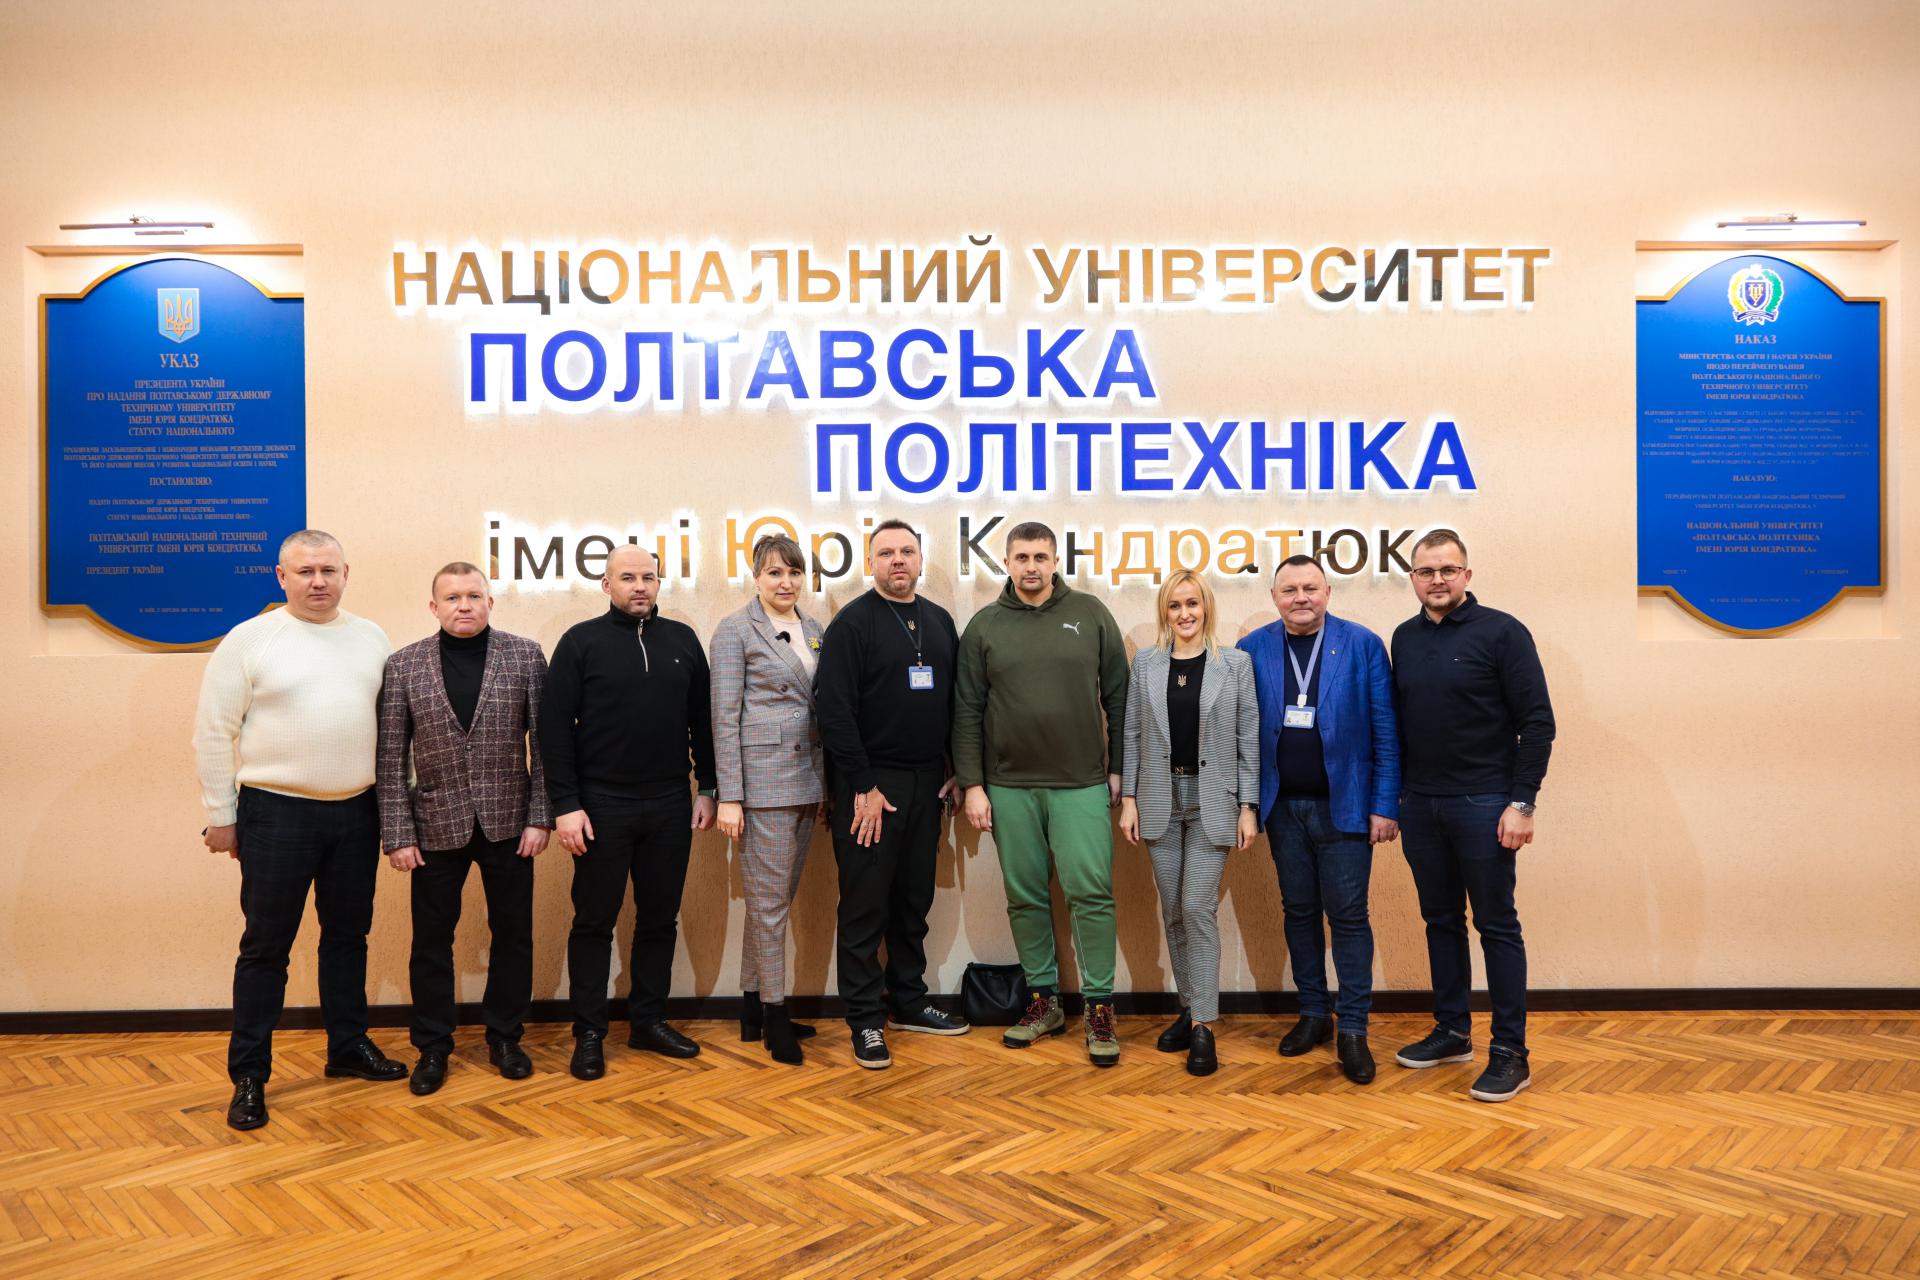 People's Deputies of Ukraine meet with IDP students studying at Poltava Polytechnic